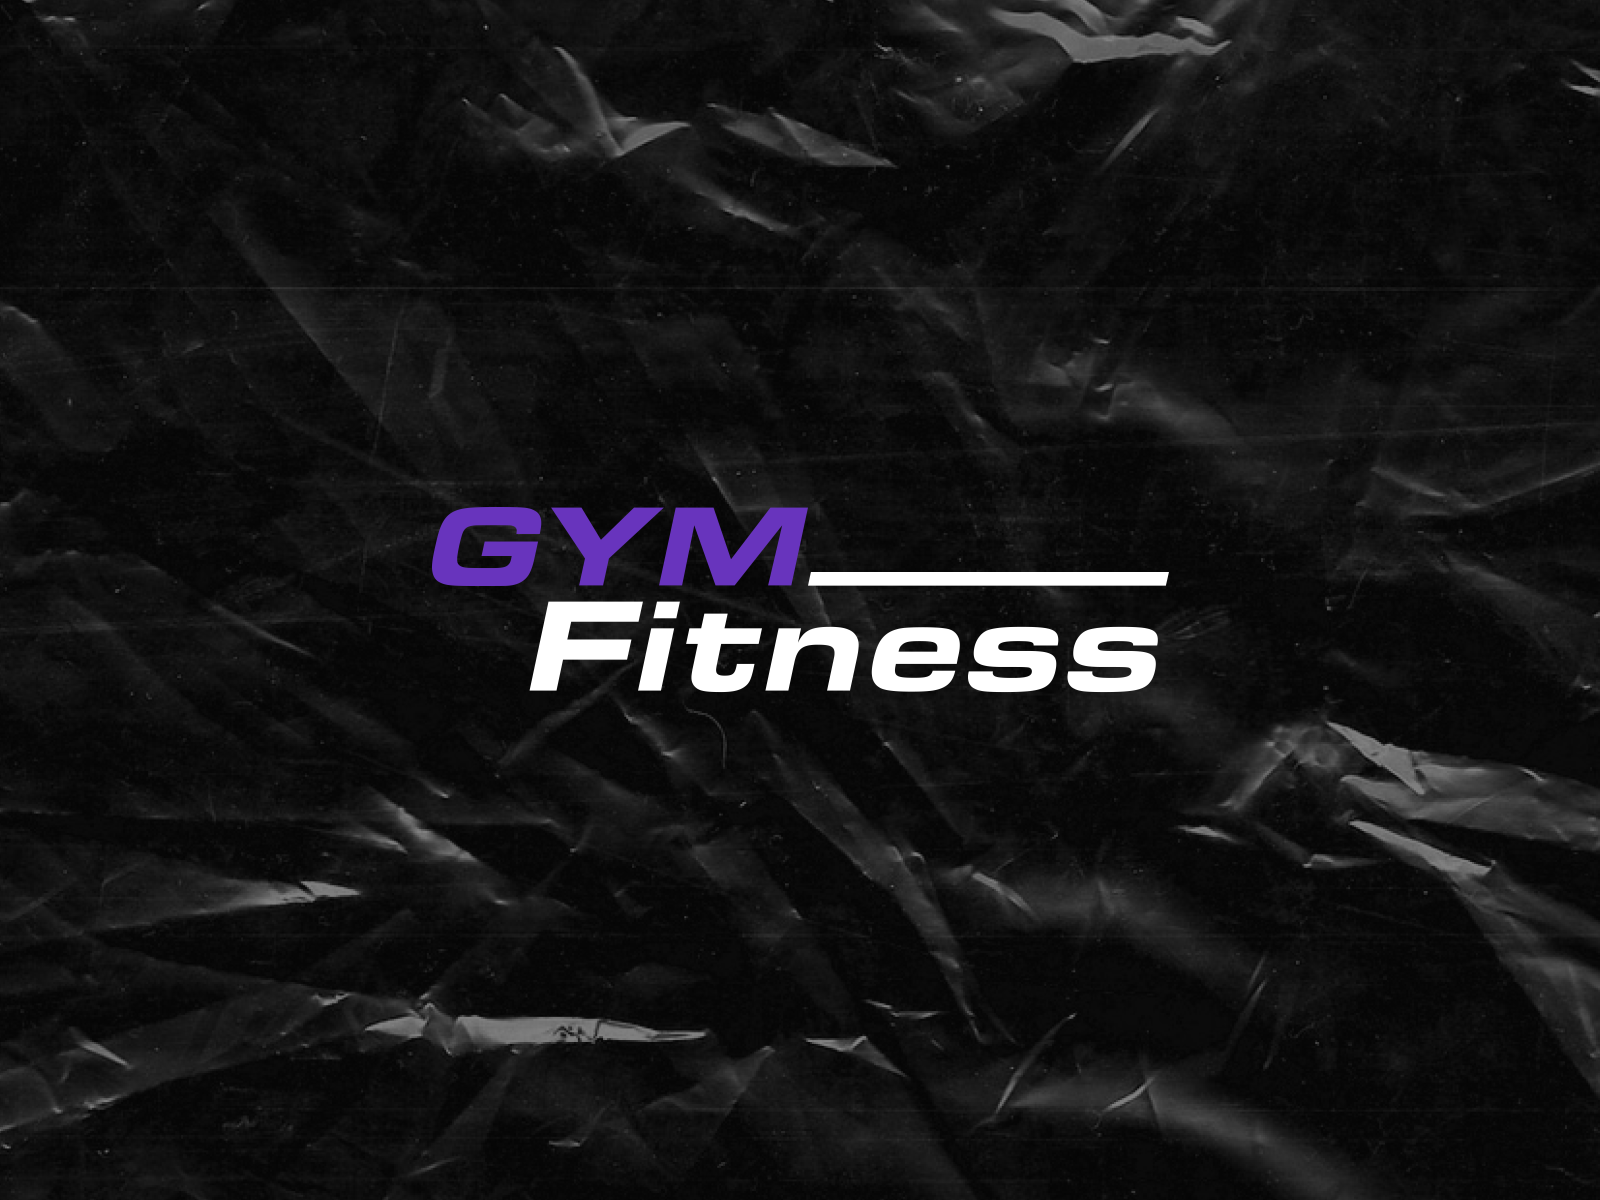 GYM Fitness logo by Alexander Volosatov on Dribbble